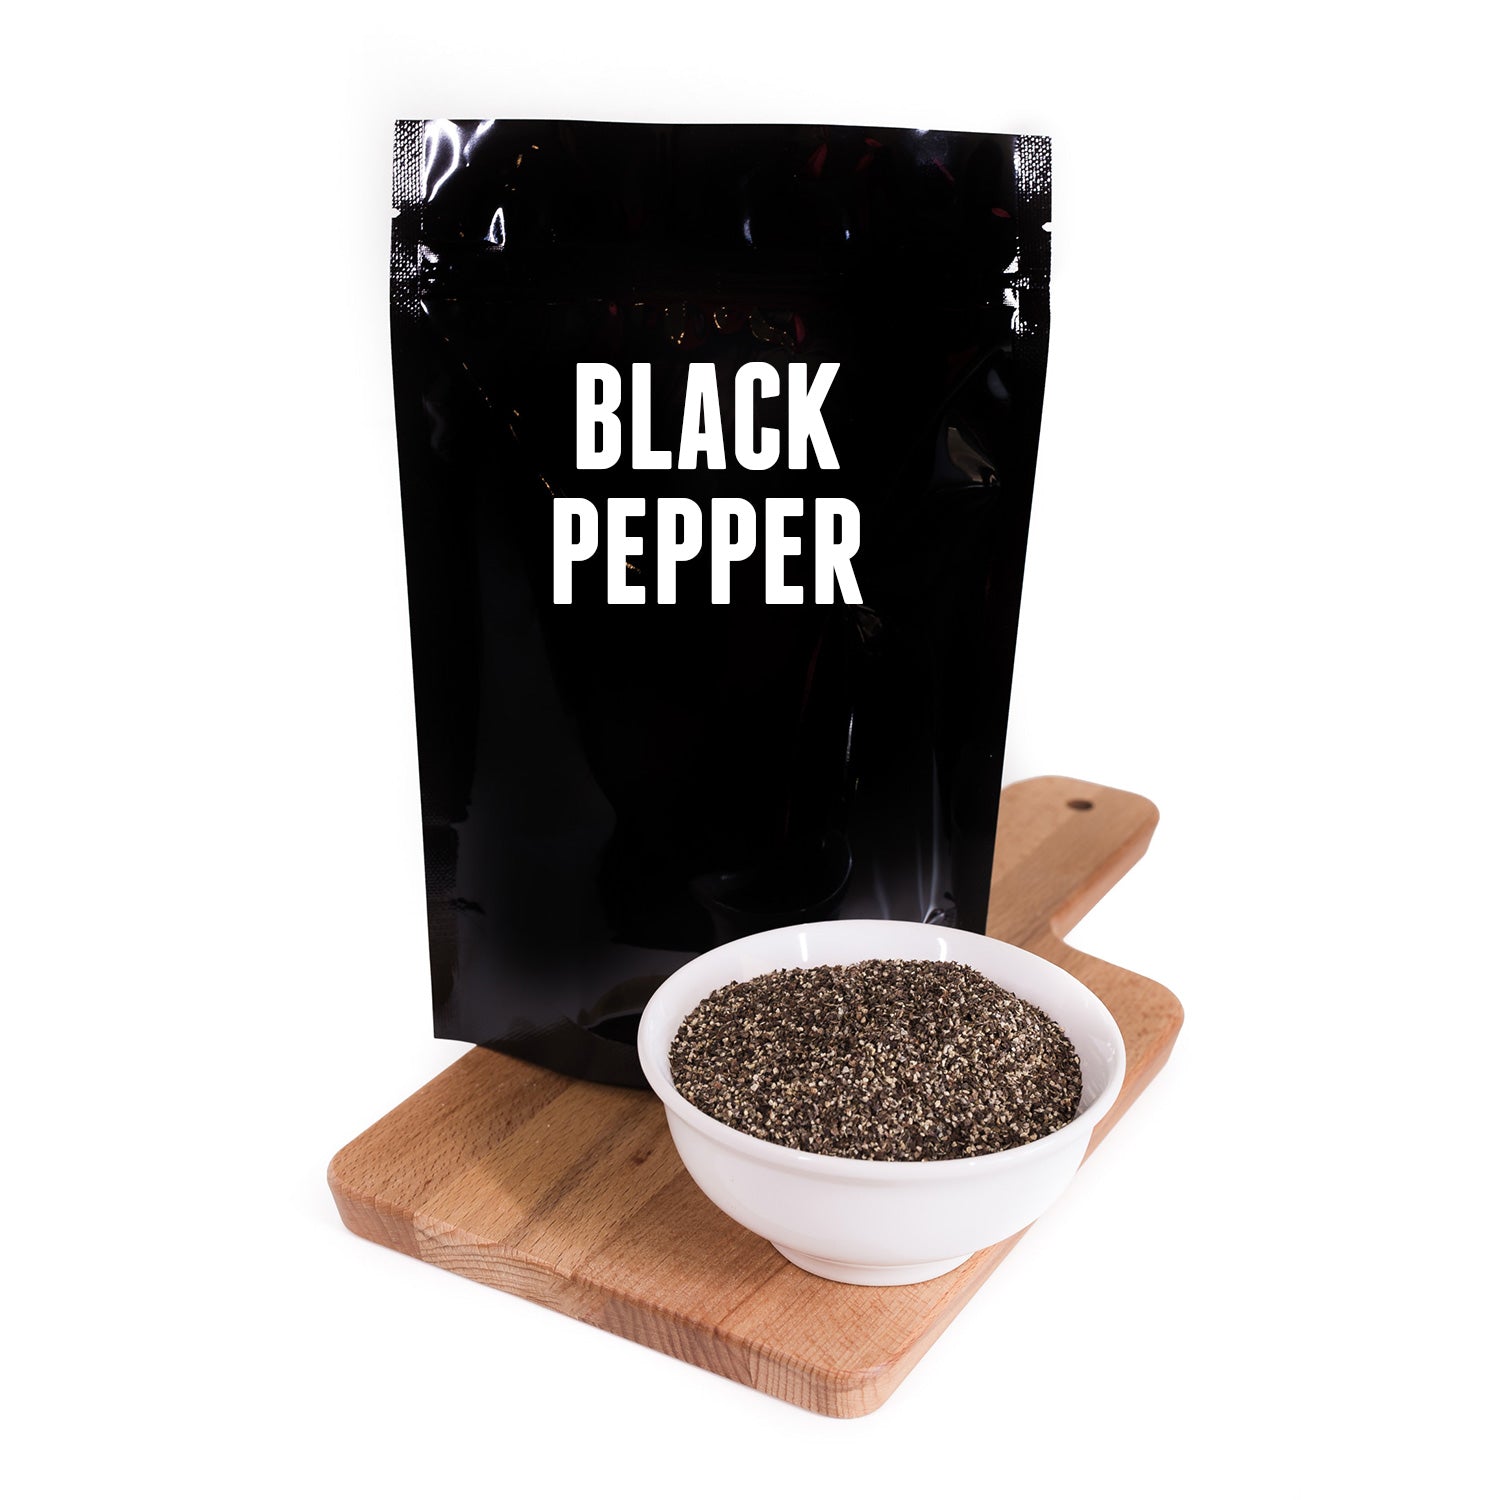 Bag of Black pepper with filled bowl